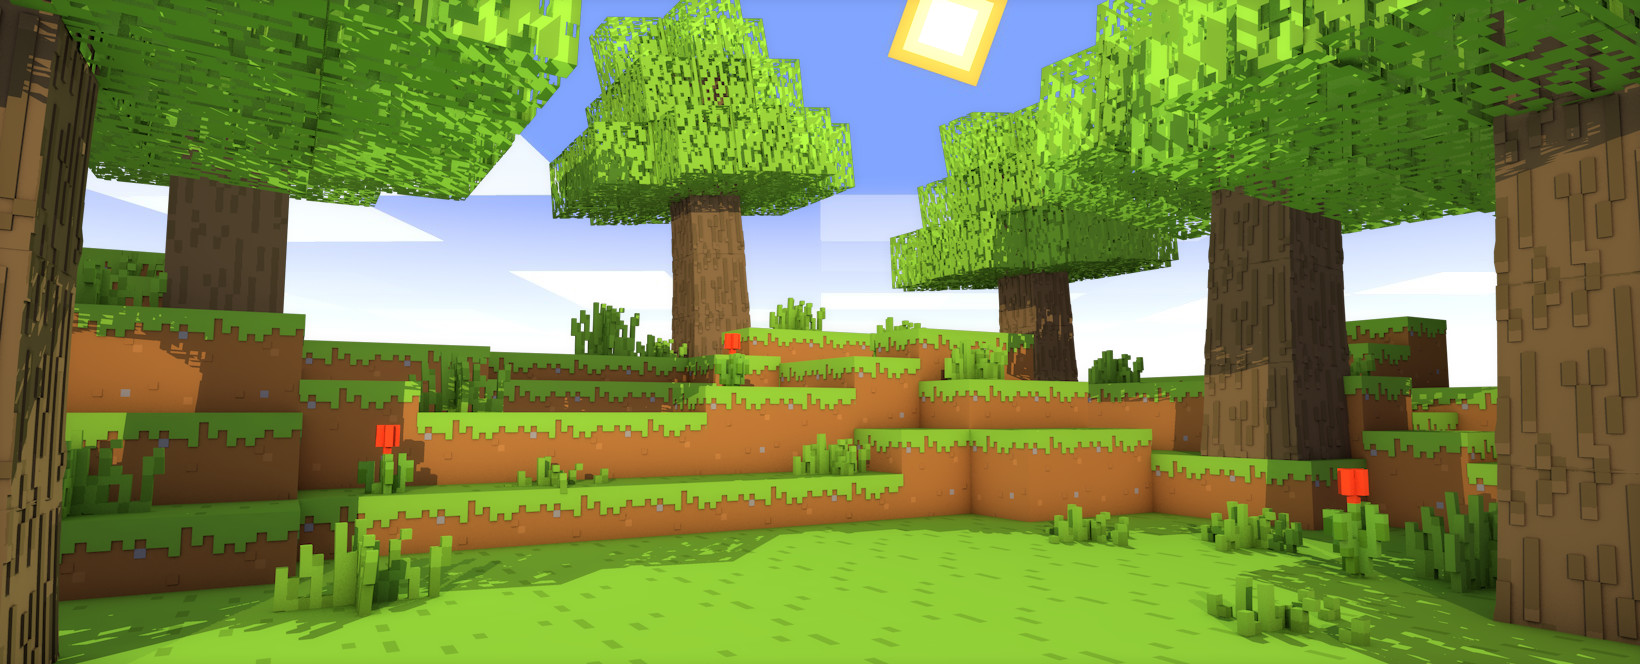 Minecraft-Game-Background-HD-Image